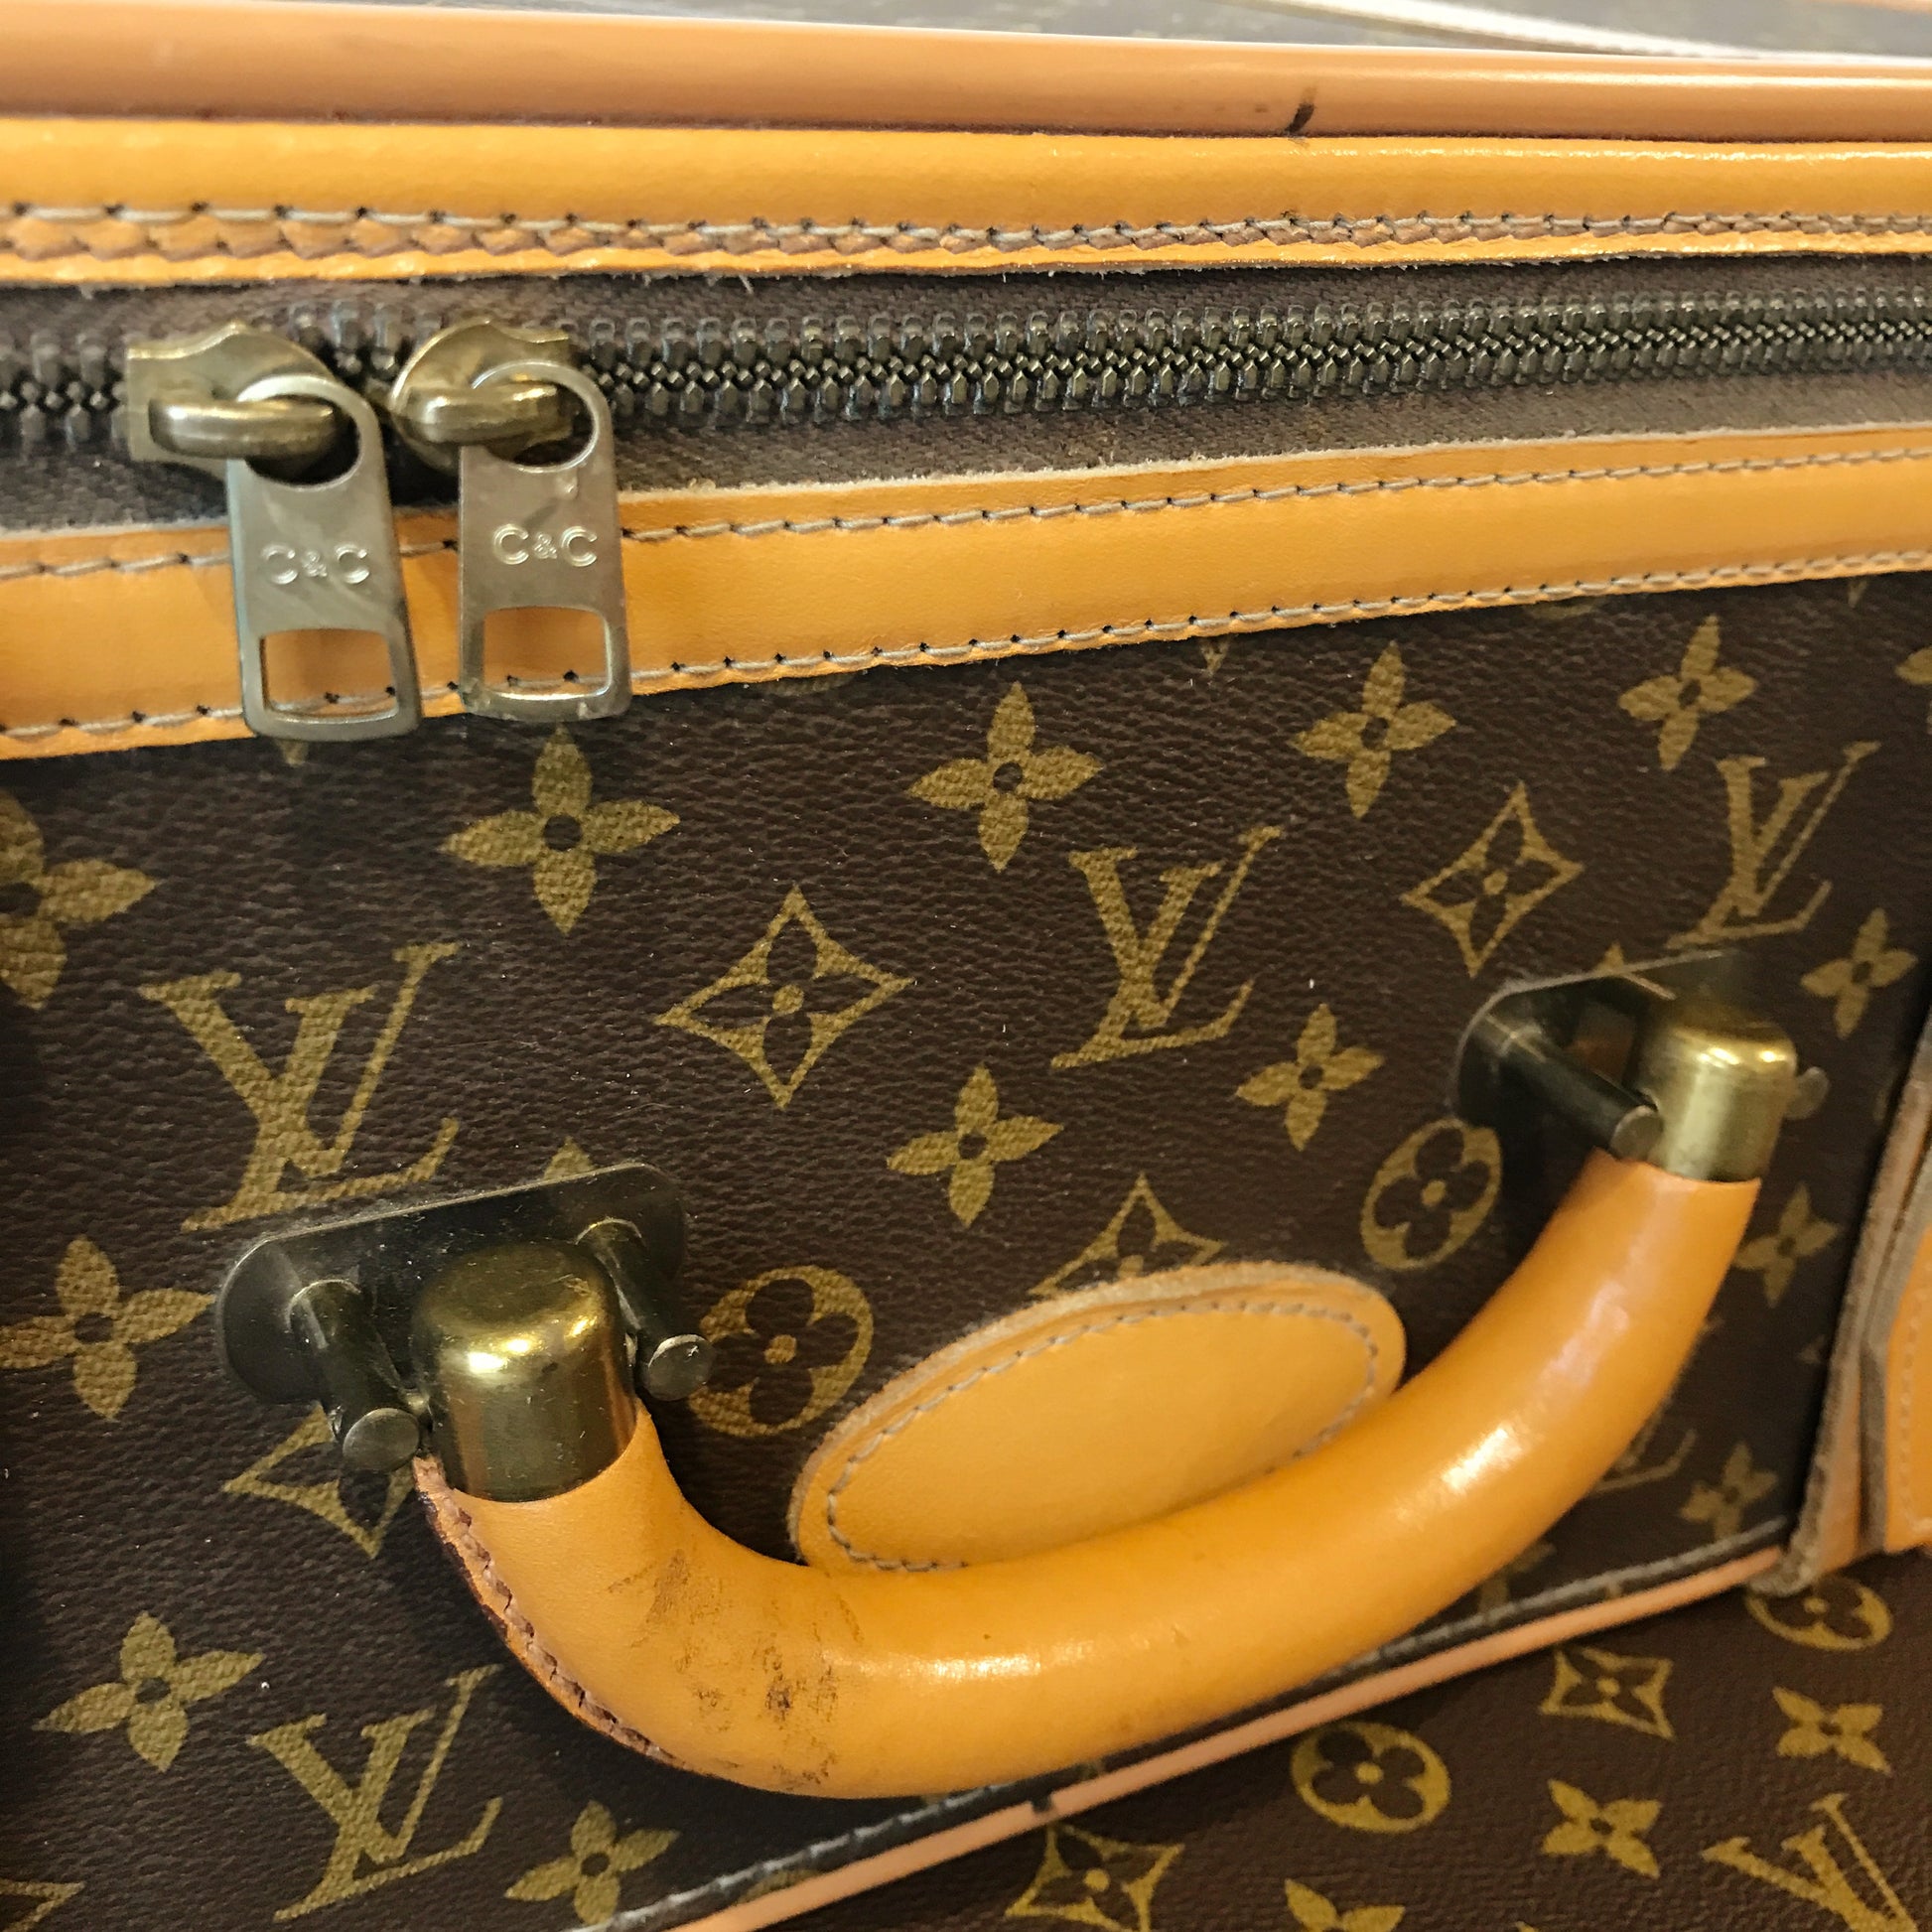 Louis Vuitton Luggage Sets Vintage Luggage